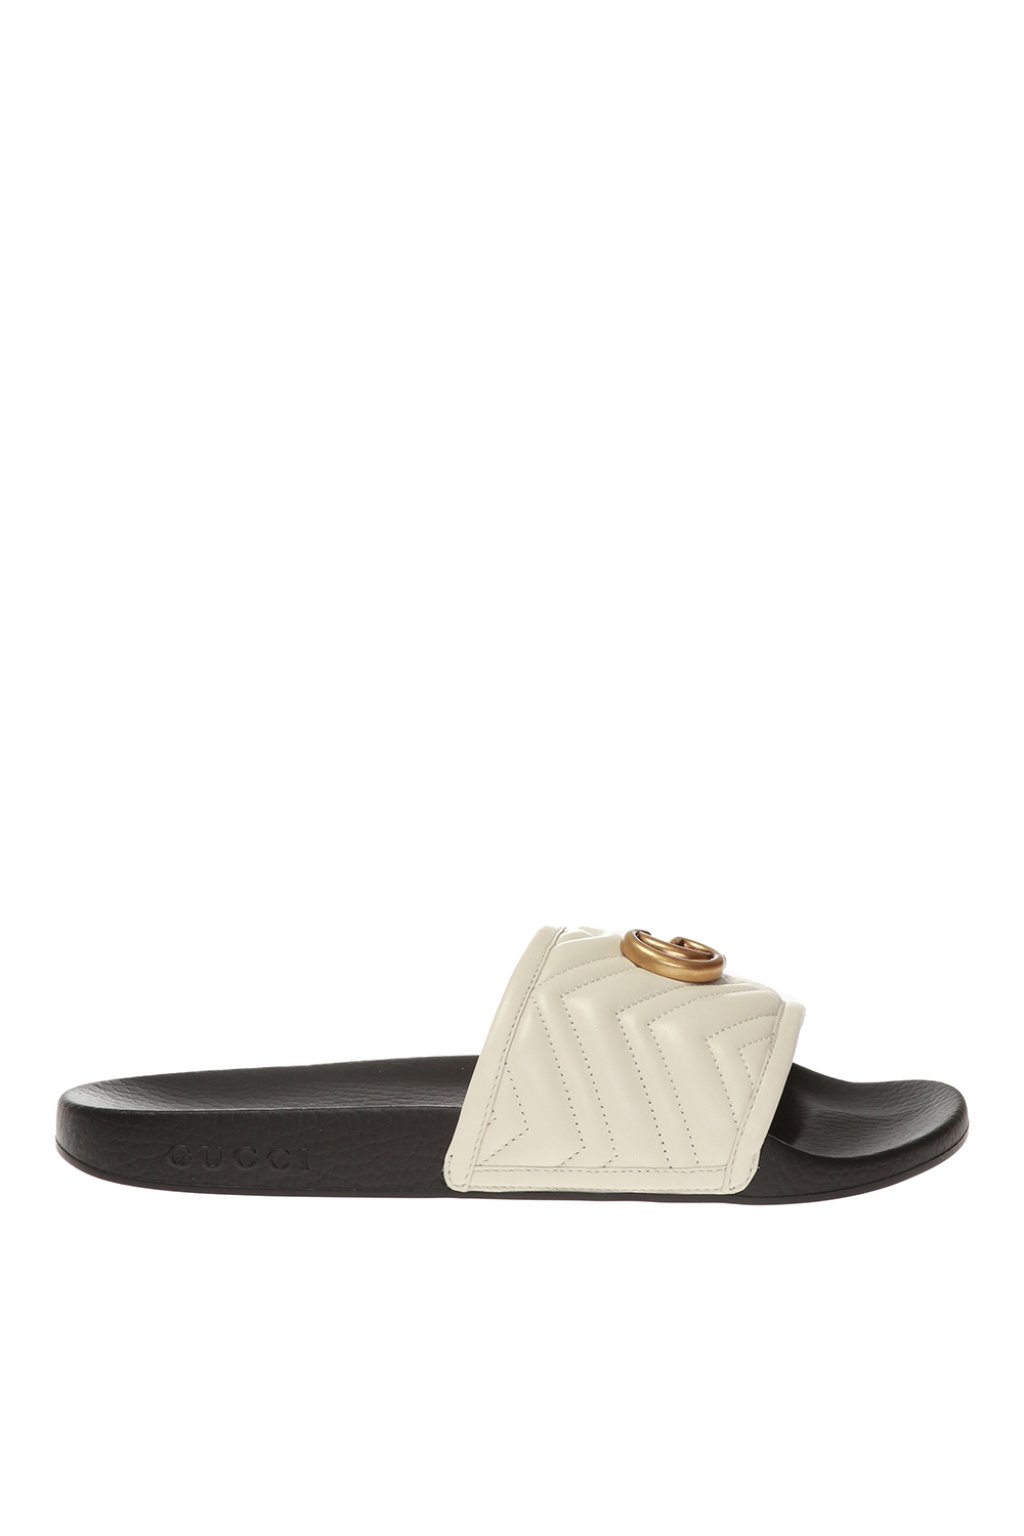 Gucci Slides with logo | Women's Shoes | Vitkac